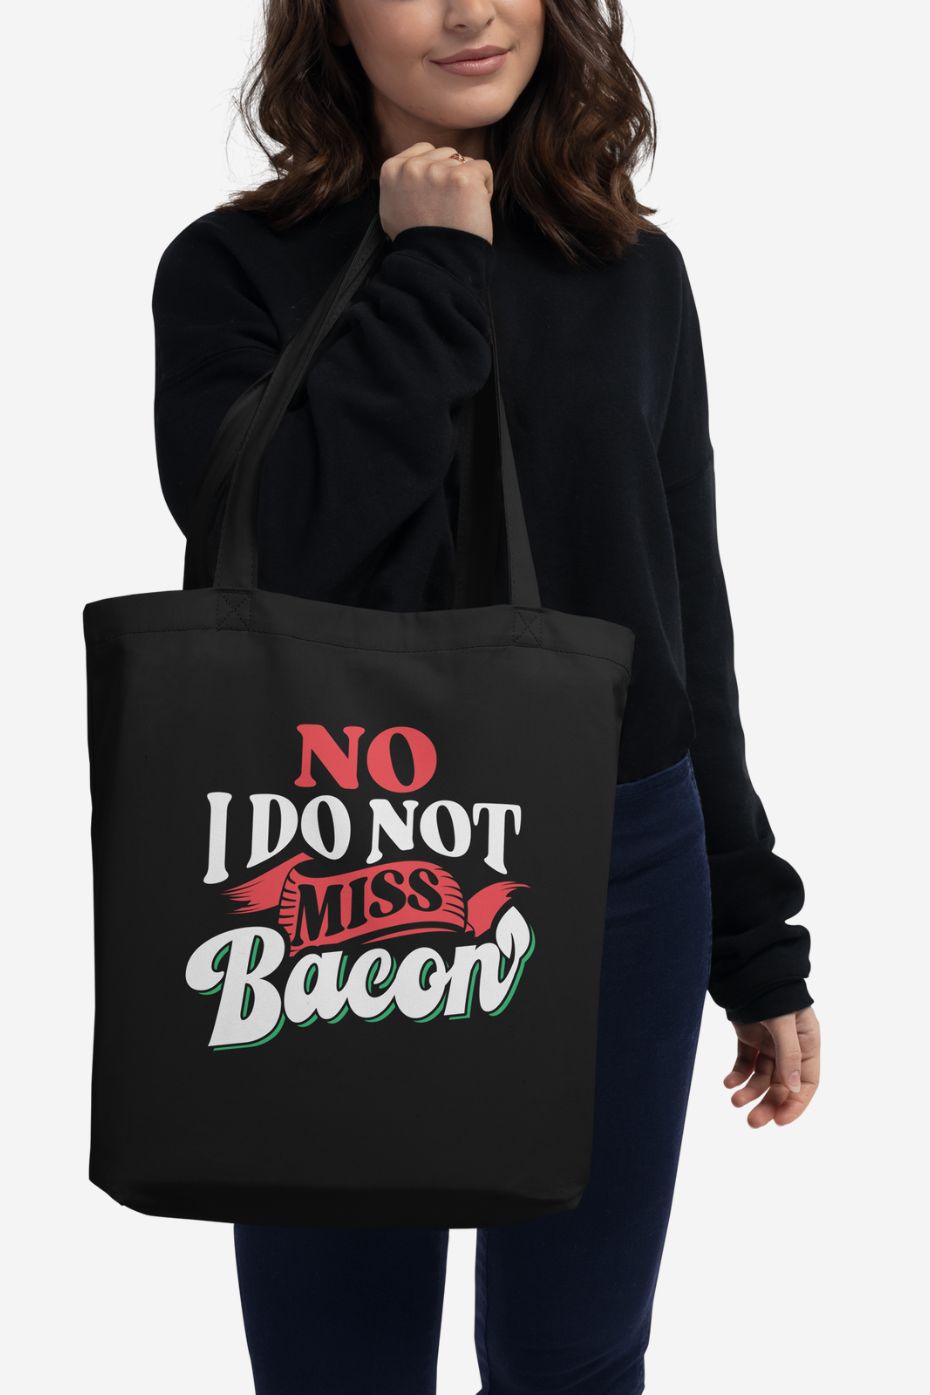 No I Don't Miss Bacon - Eco Tote Bag